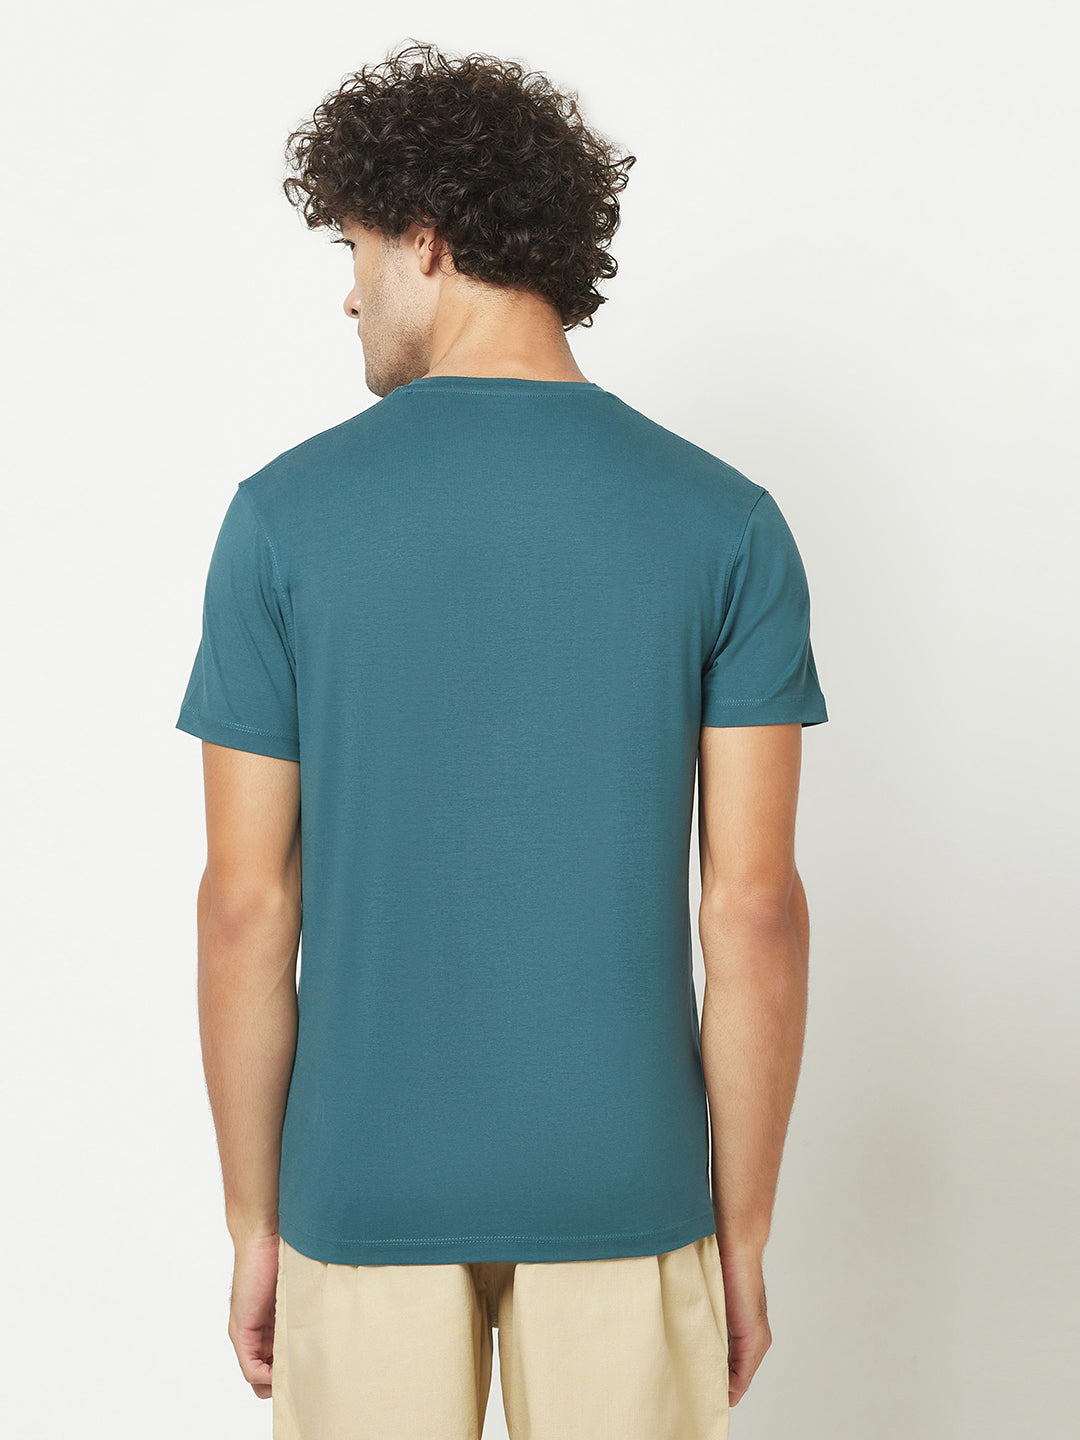  Plain Teal Blue V-Neck T-Shirt